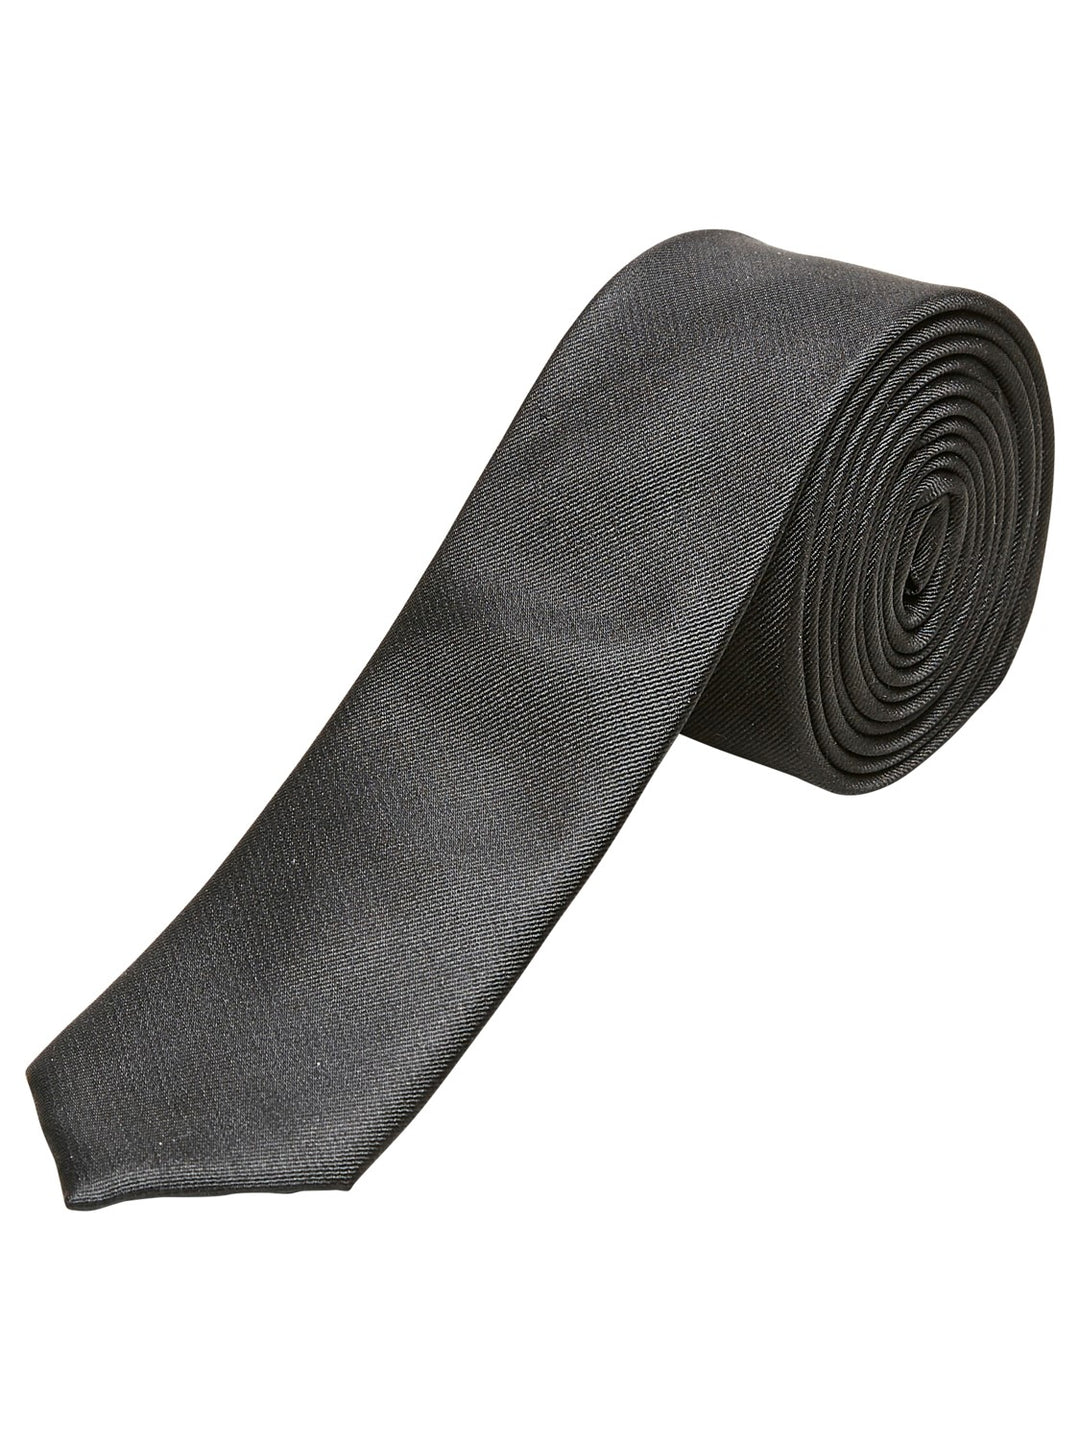 Plain Tie 5cm